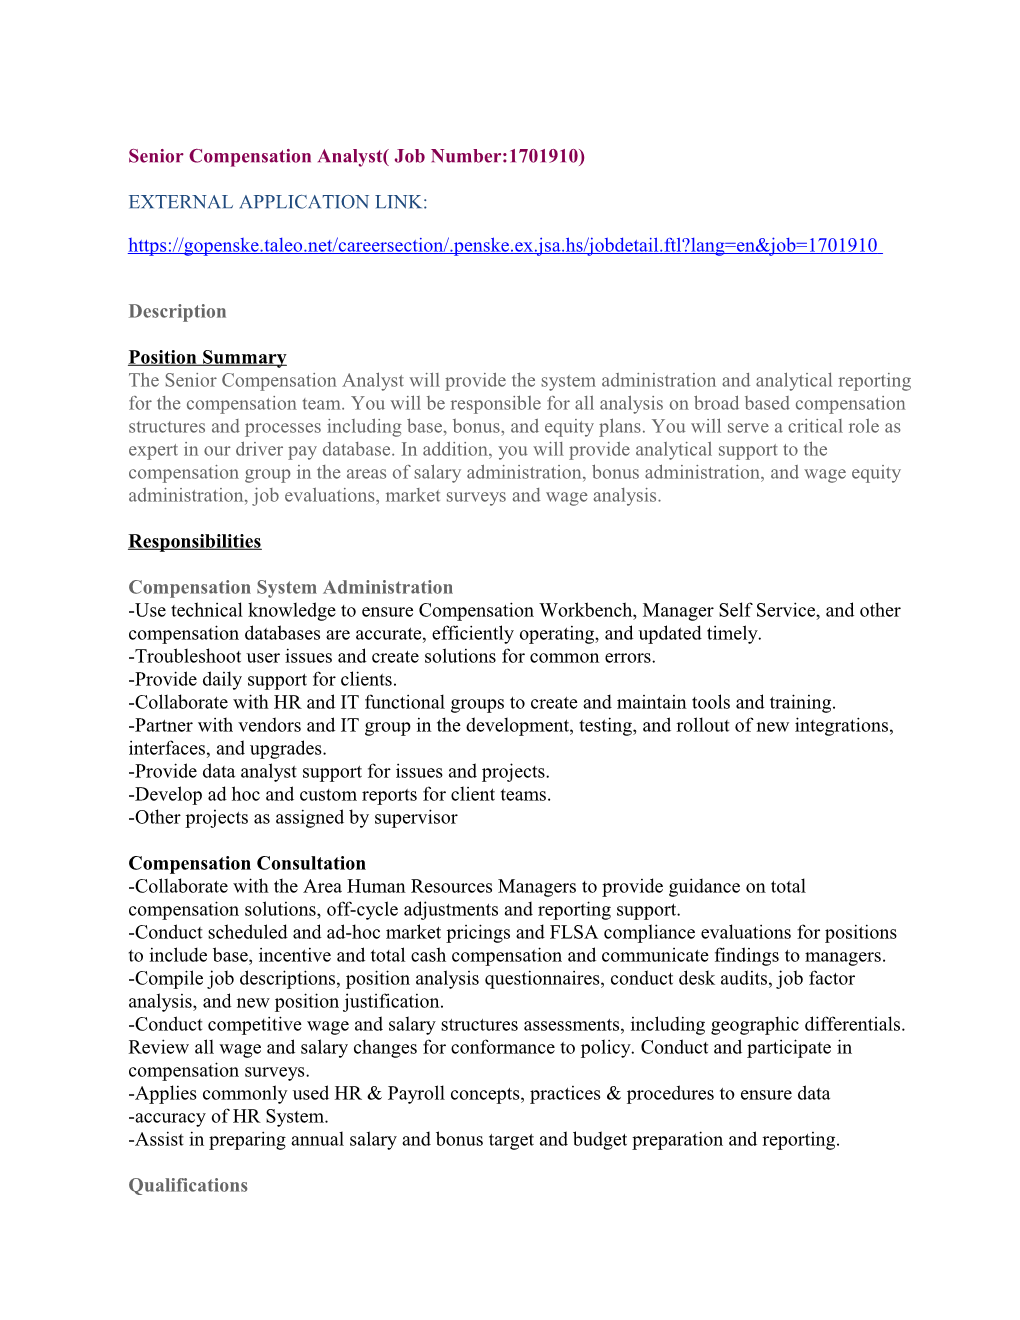 Senior Compensation Analyst( Job Number:1701910) EXTERNAL APPLICATION LINK: Description